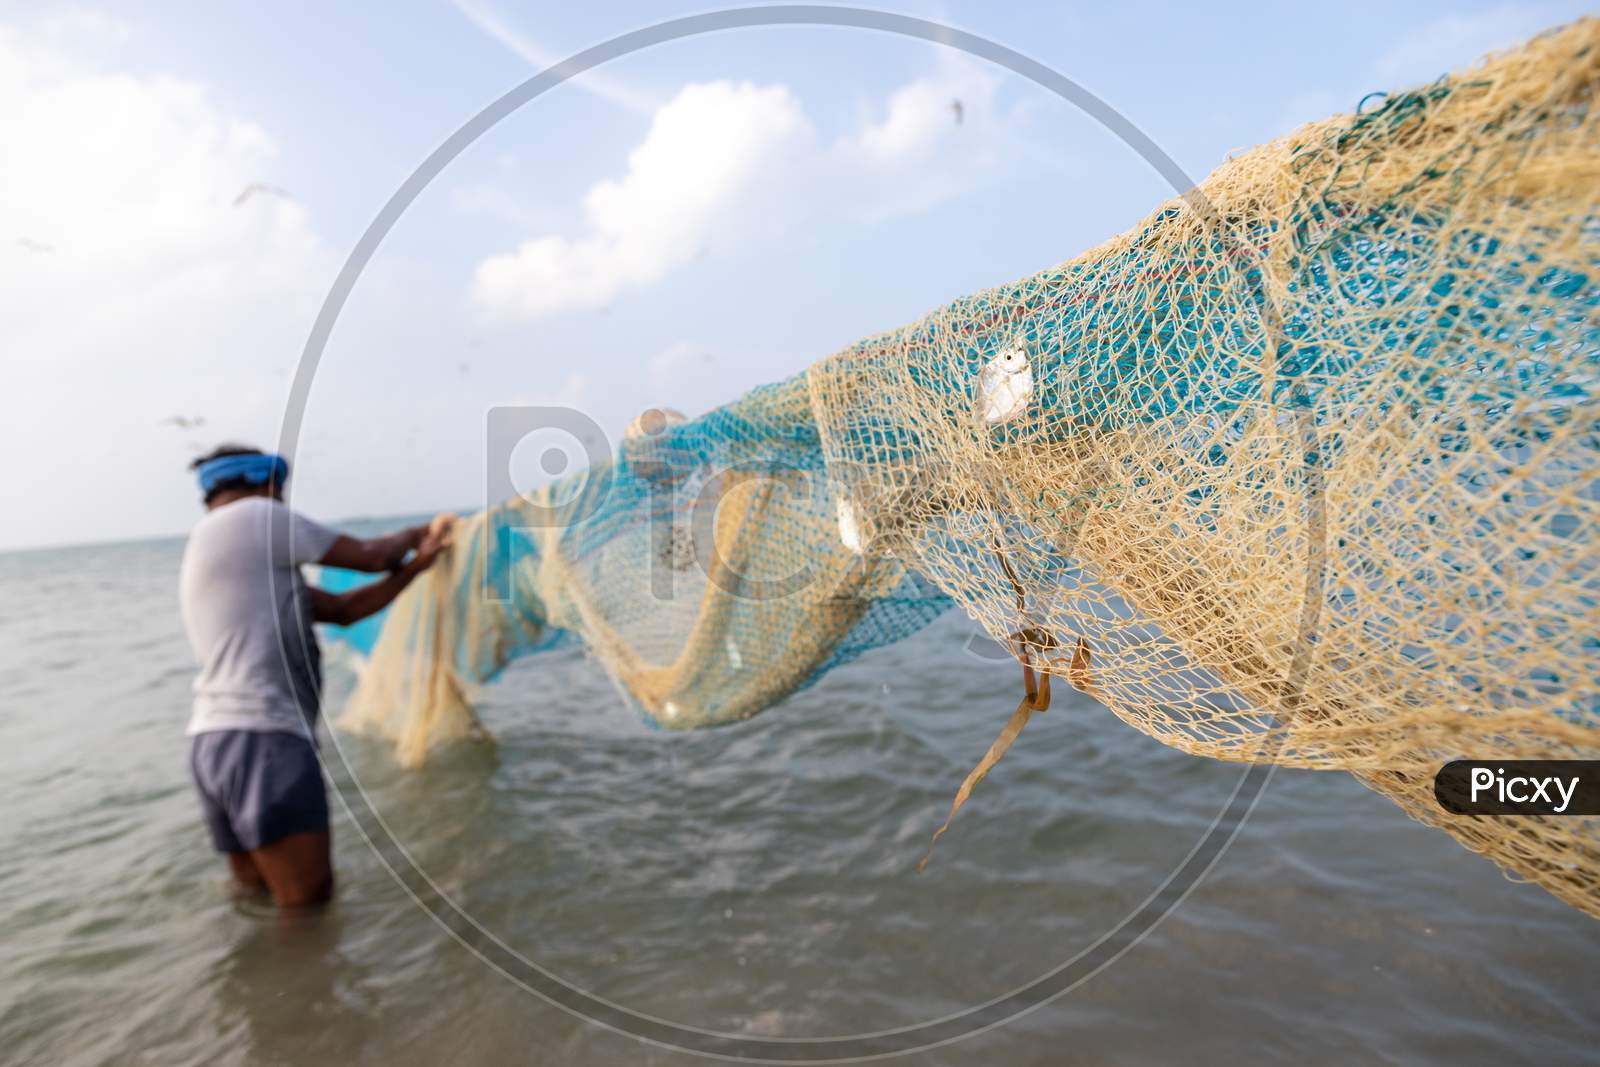 Chennai, Tamil Nadu, India - Rameswaram 19 01 2021: Fishing Net And The Man Holding It